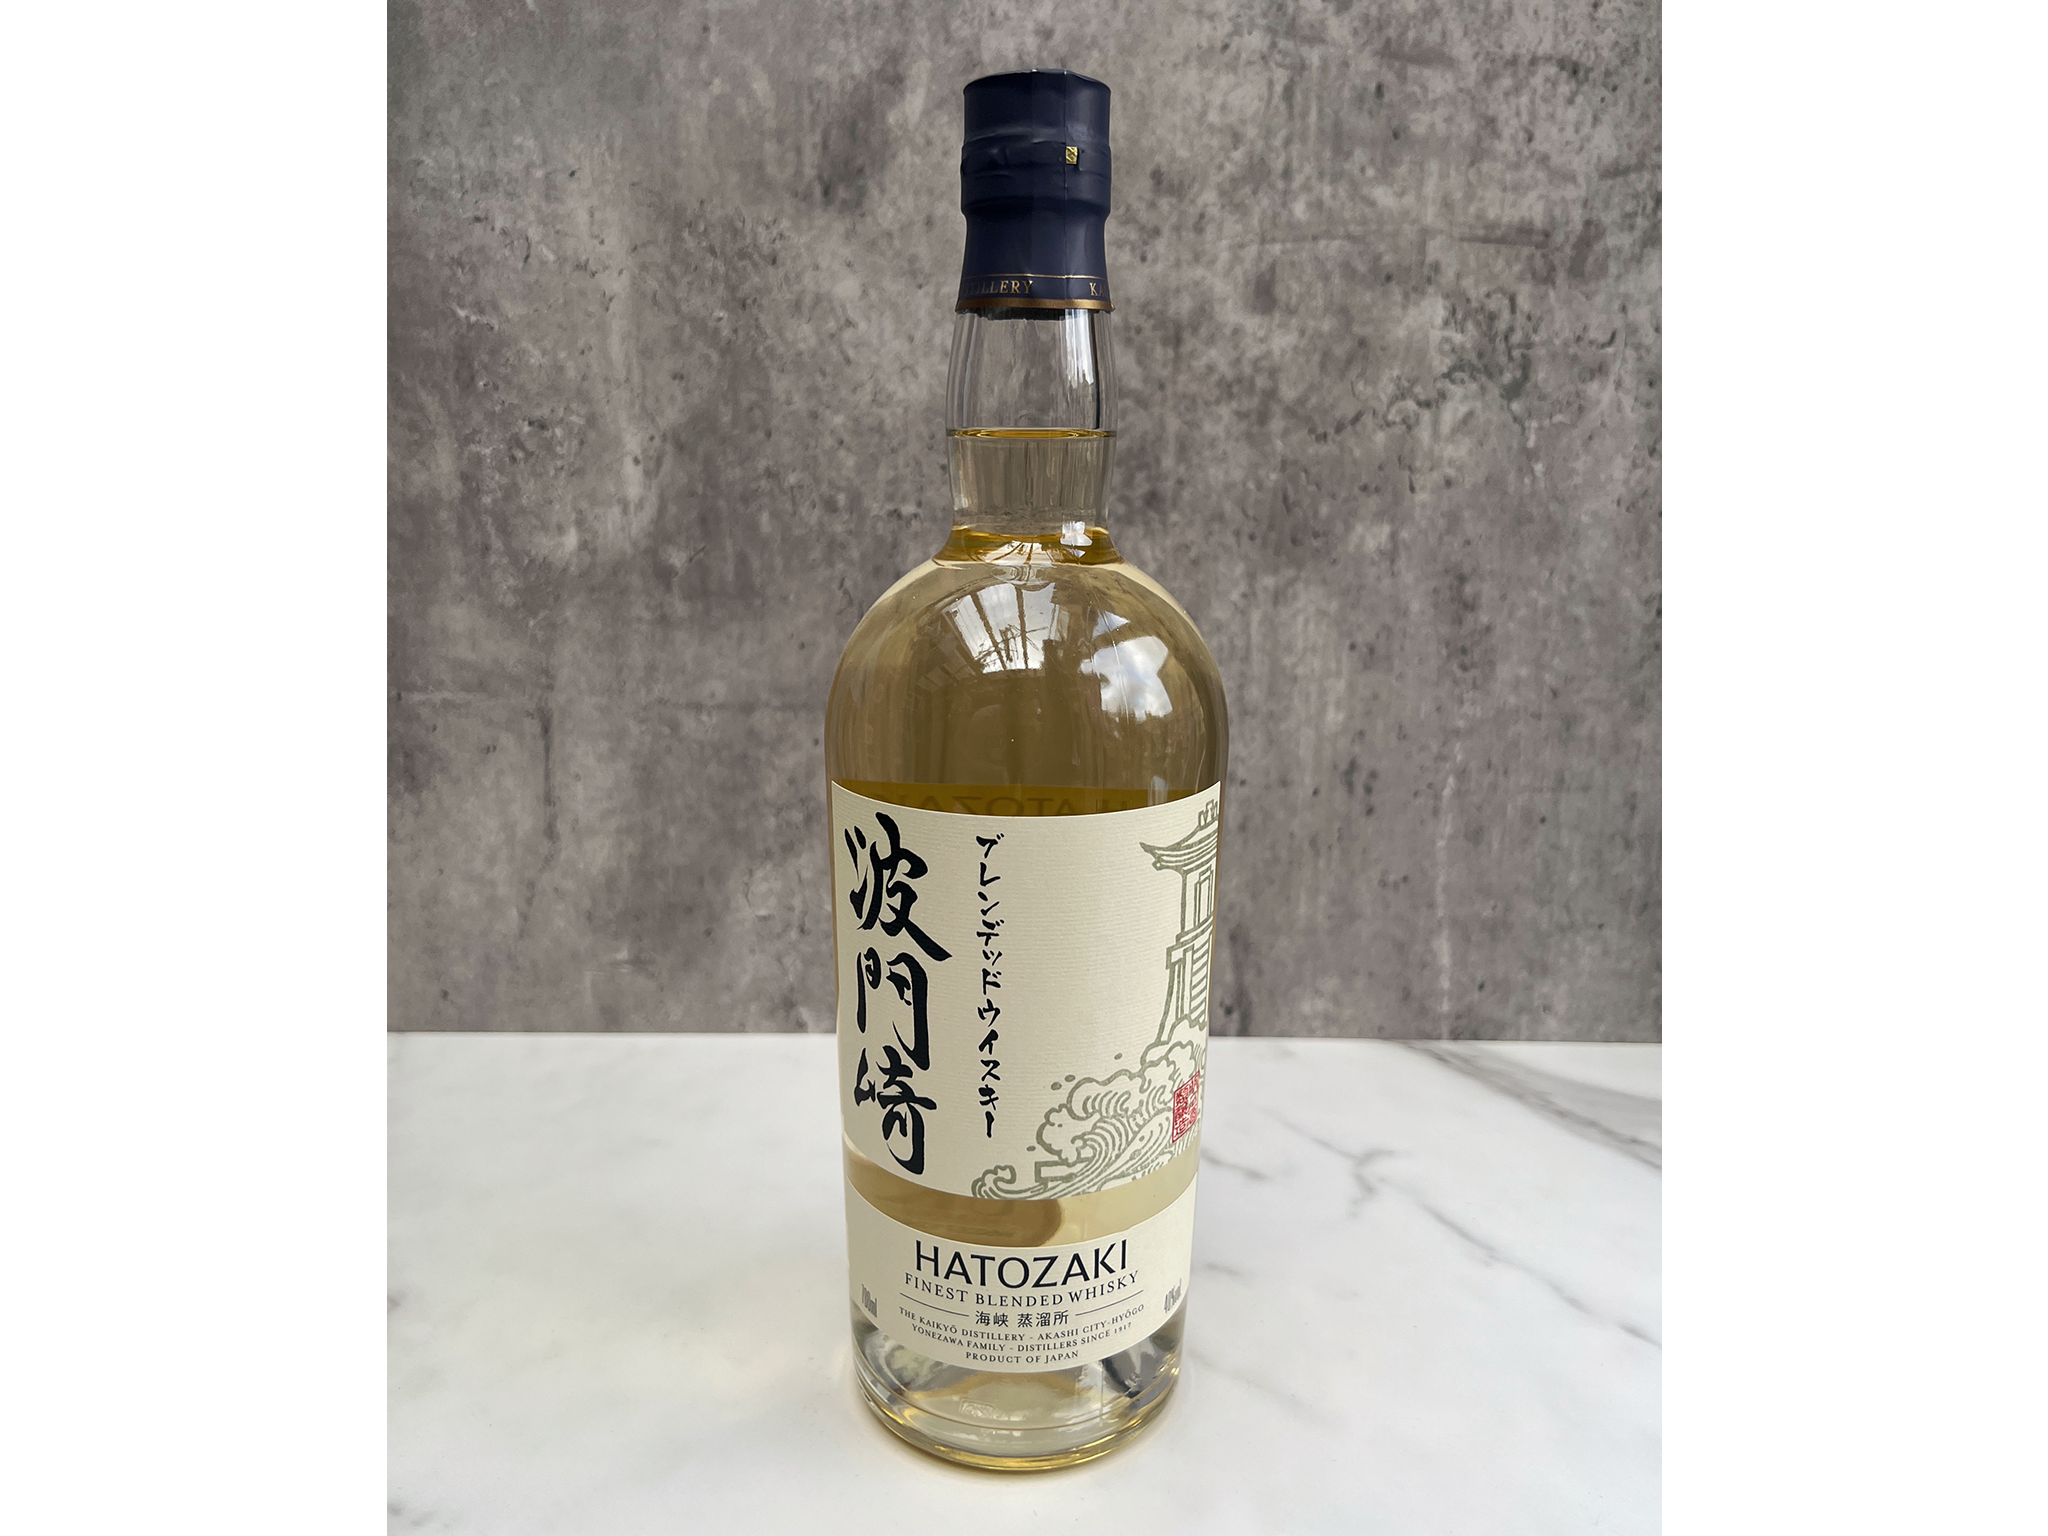 Hatozaki finest blended whisky